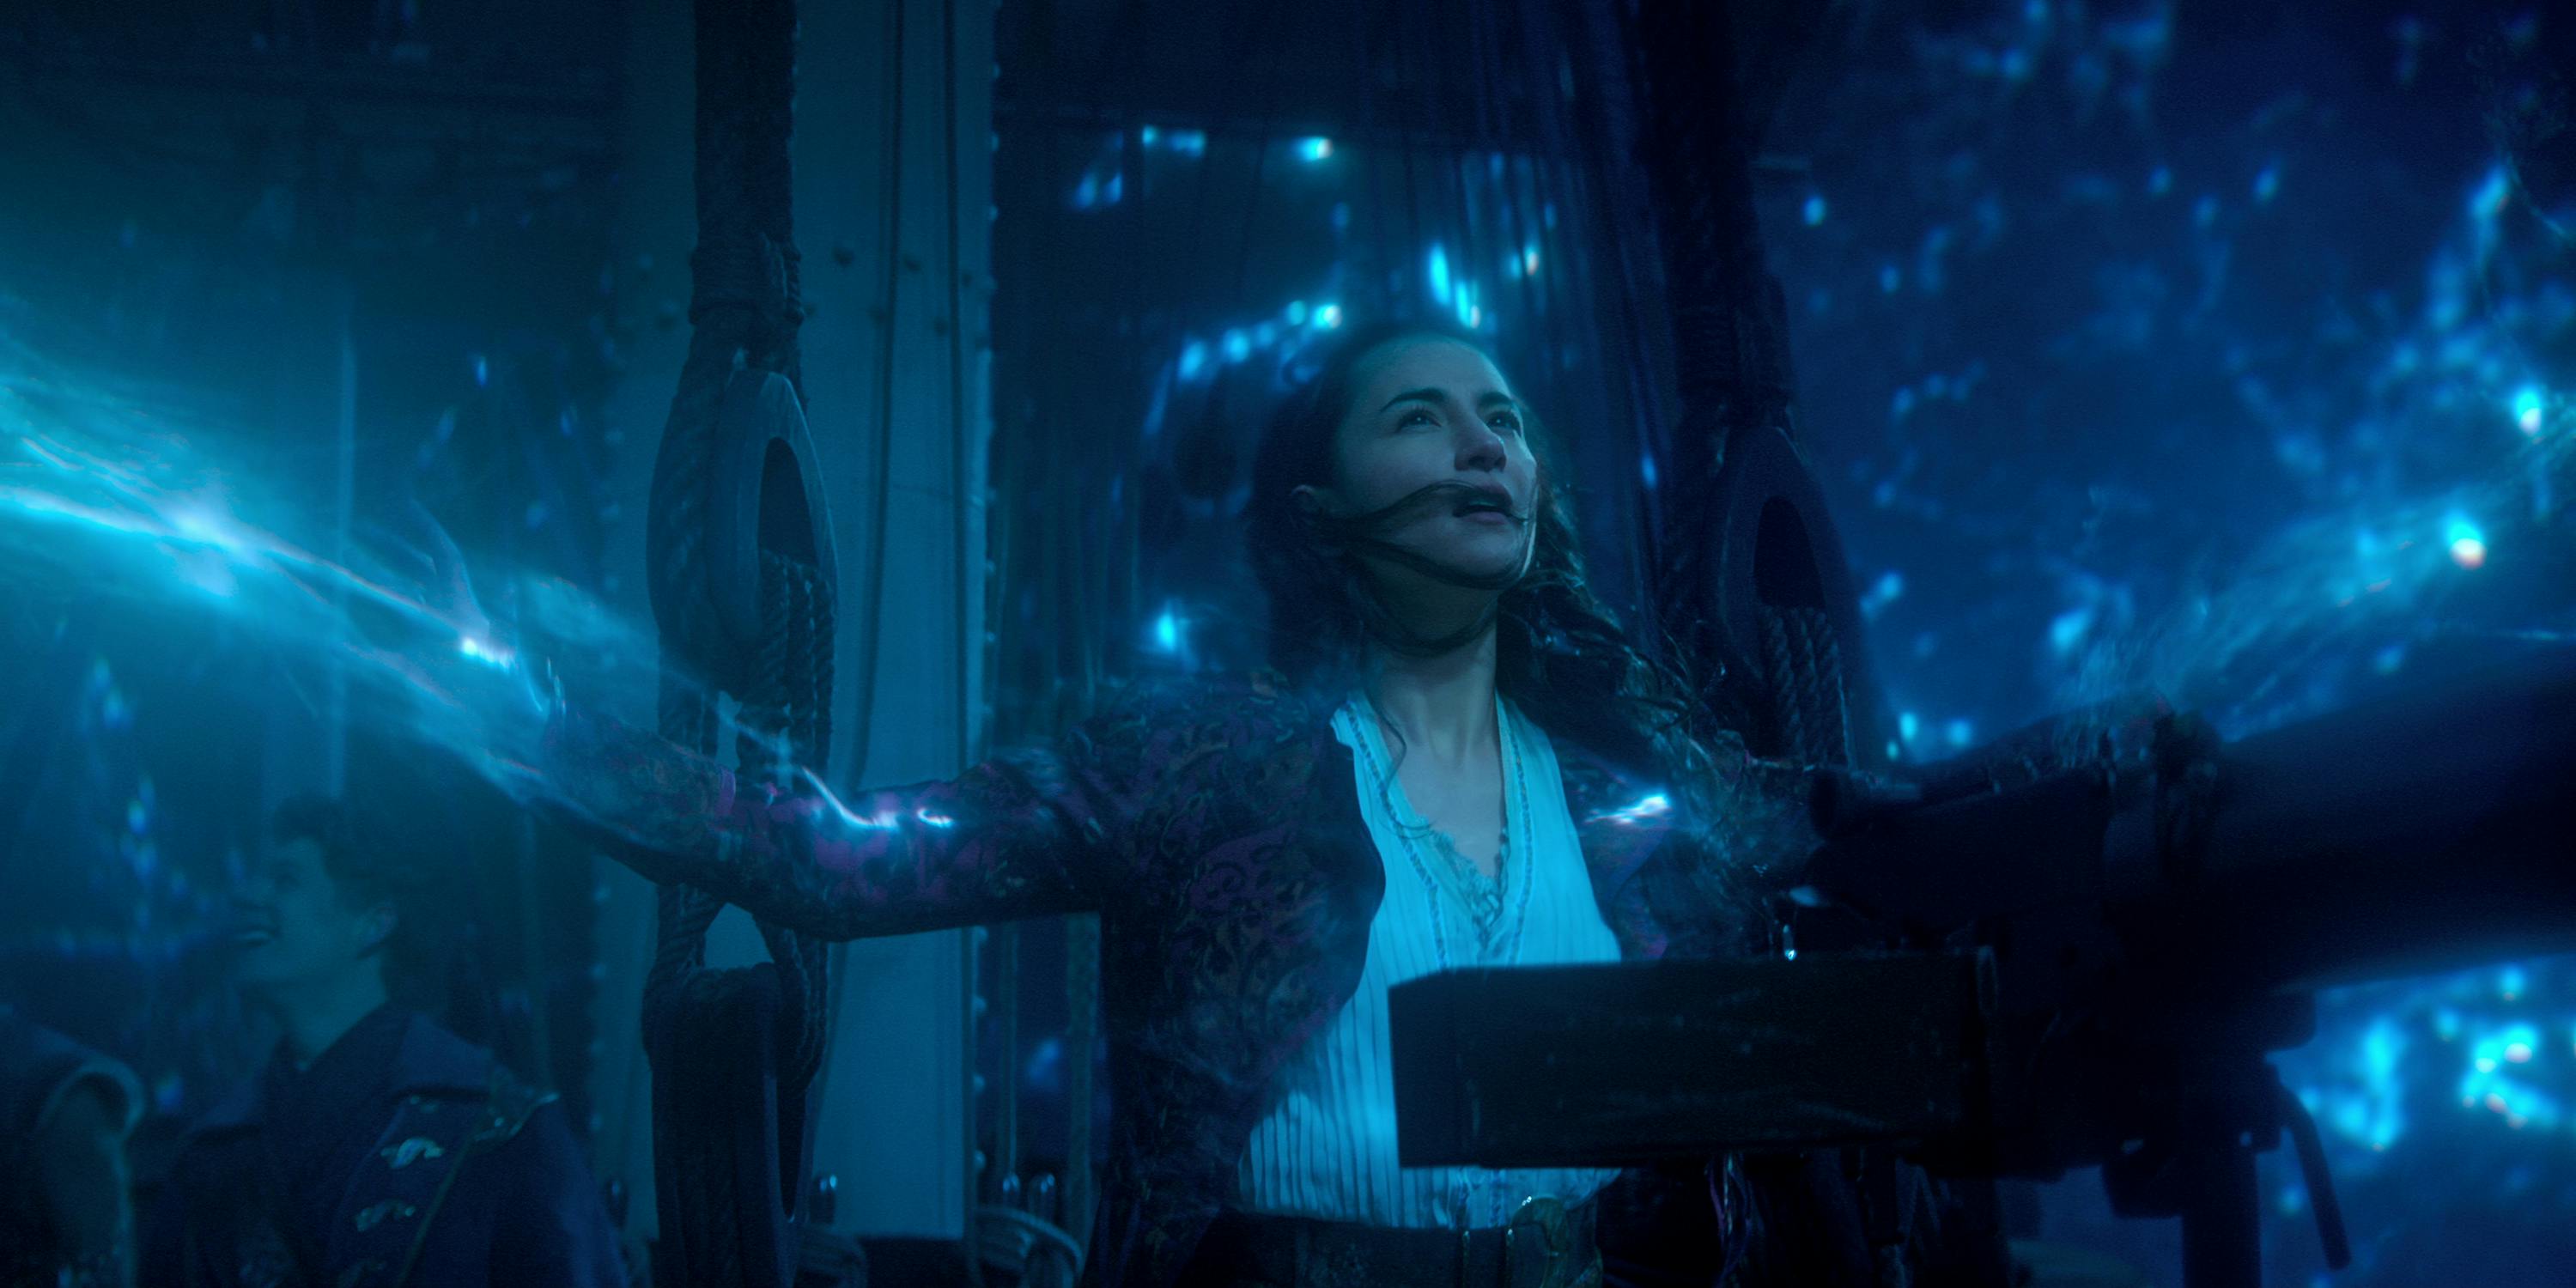 Alina Starkov (Jessie Mei Li) stands in a dark room surrounded by neon blue light. 